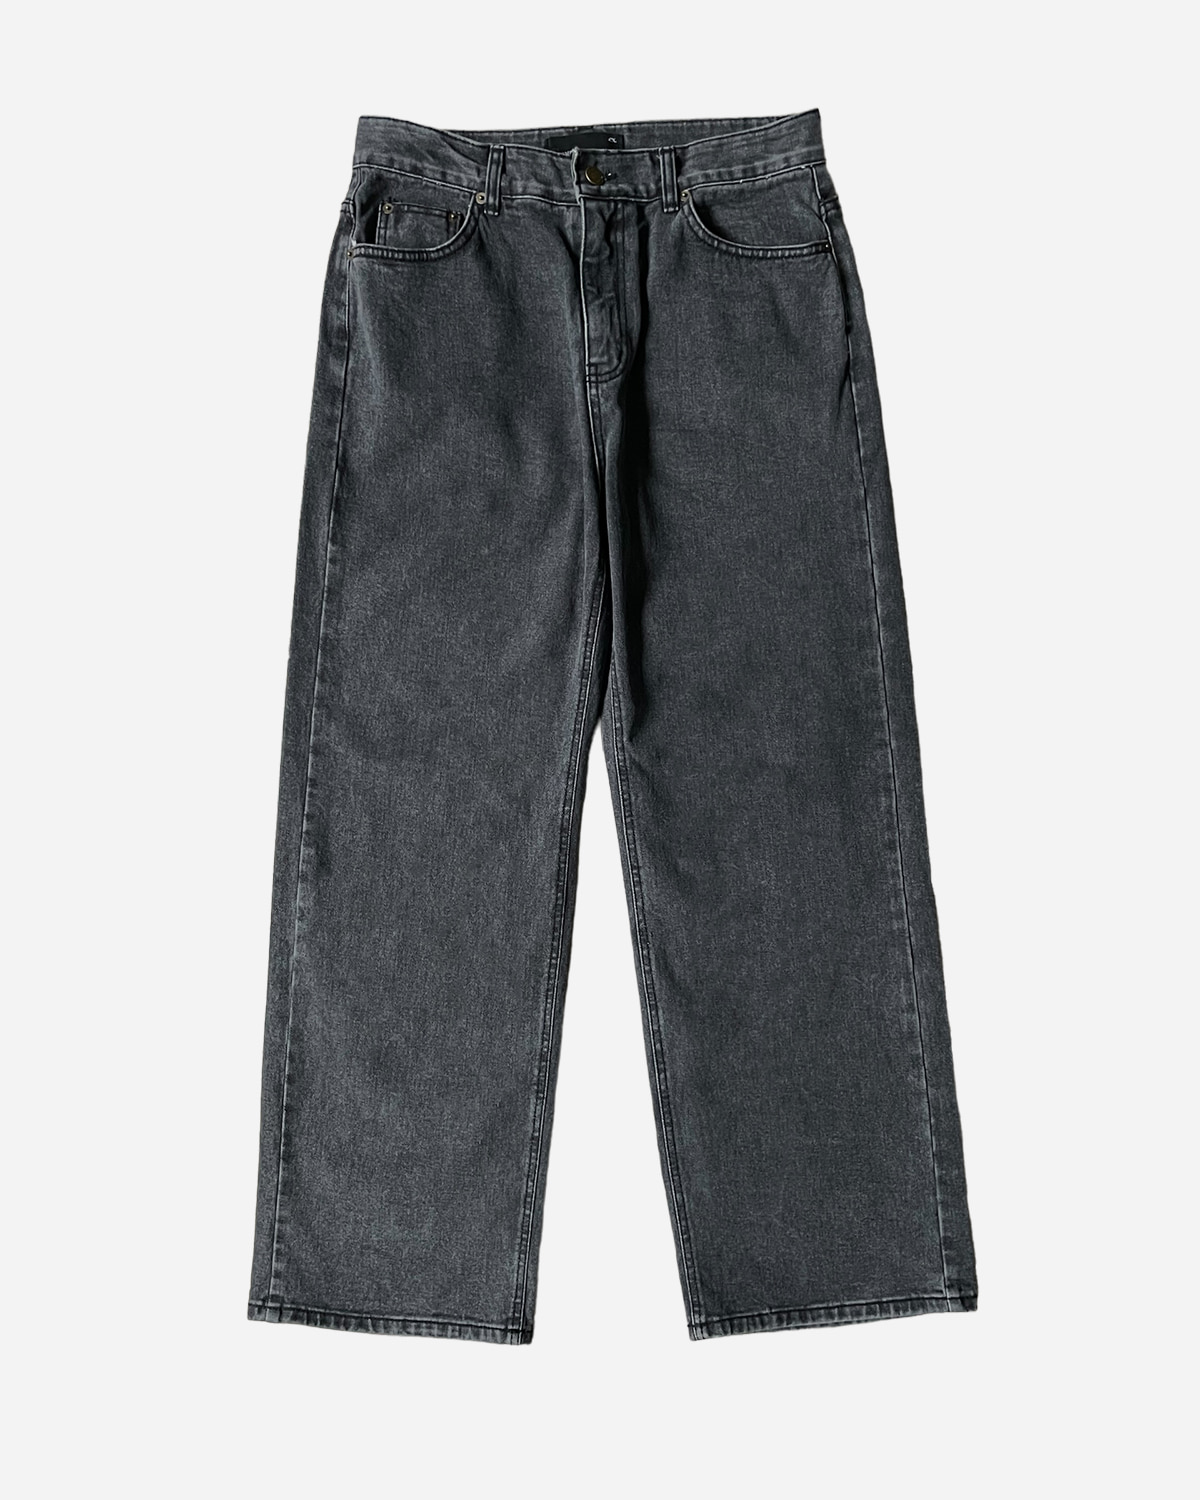 Long black washed denim pants (1C)